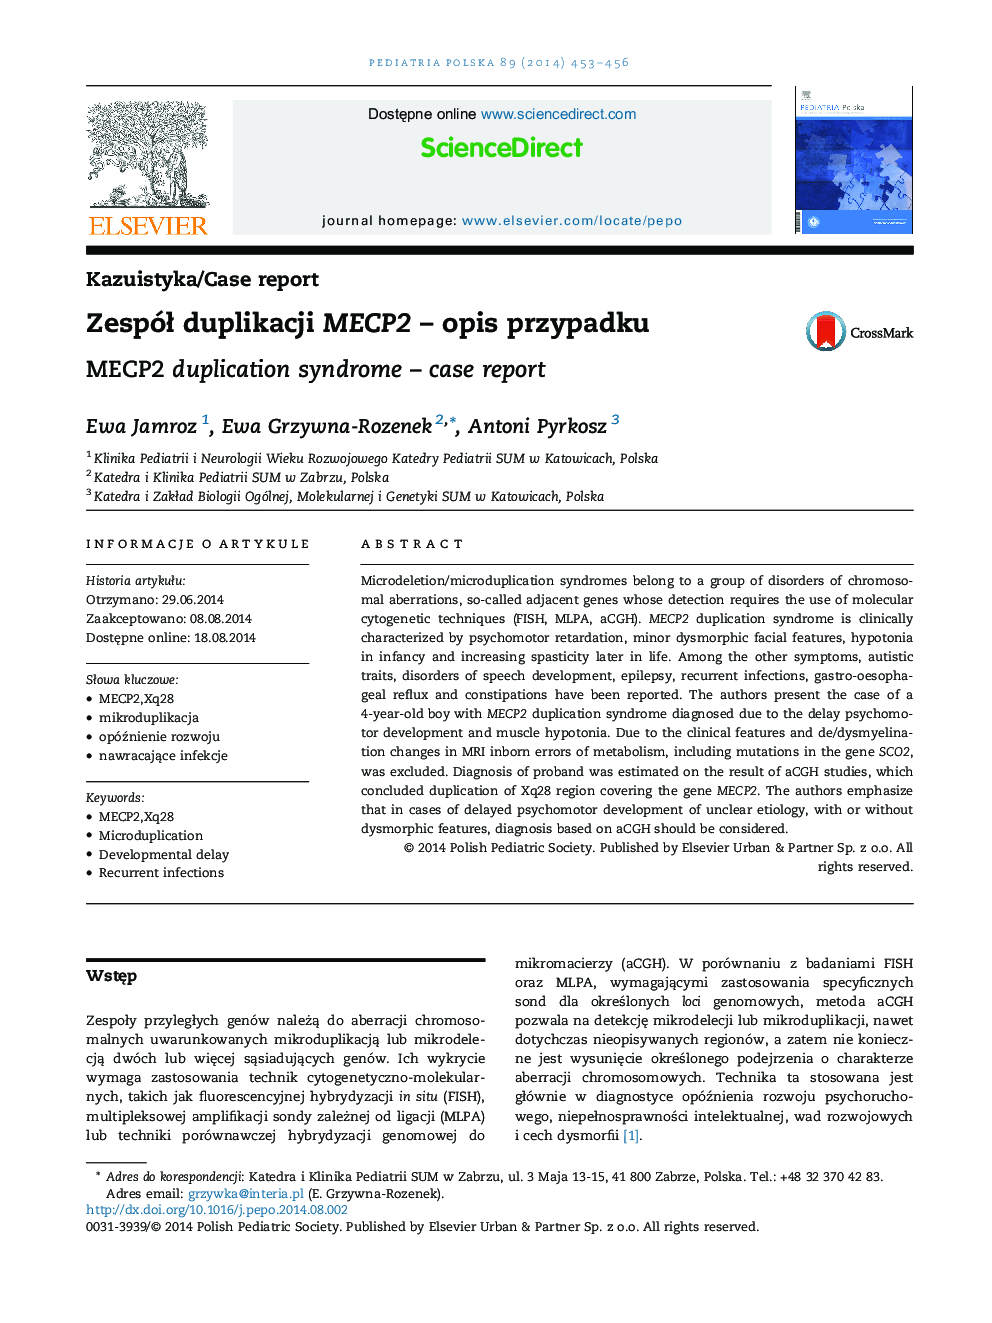 ZespóÅ duplikacji MECP2 - opis przypadku